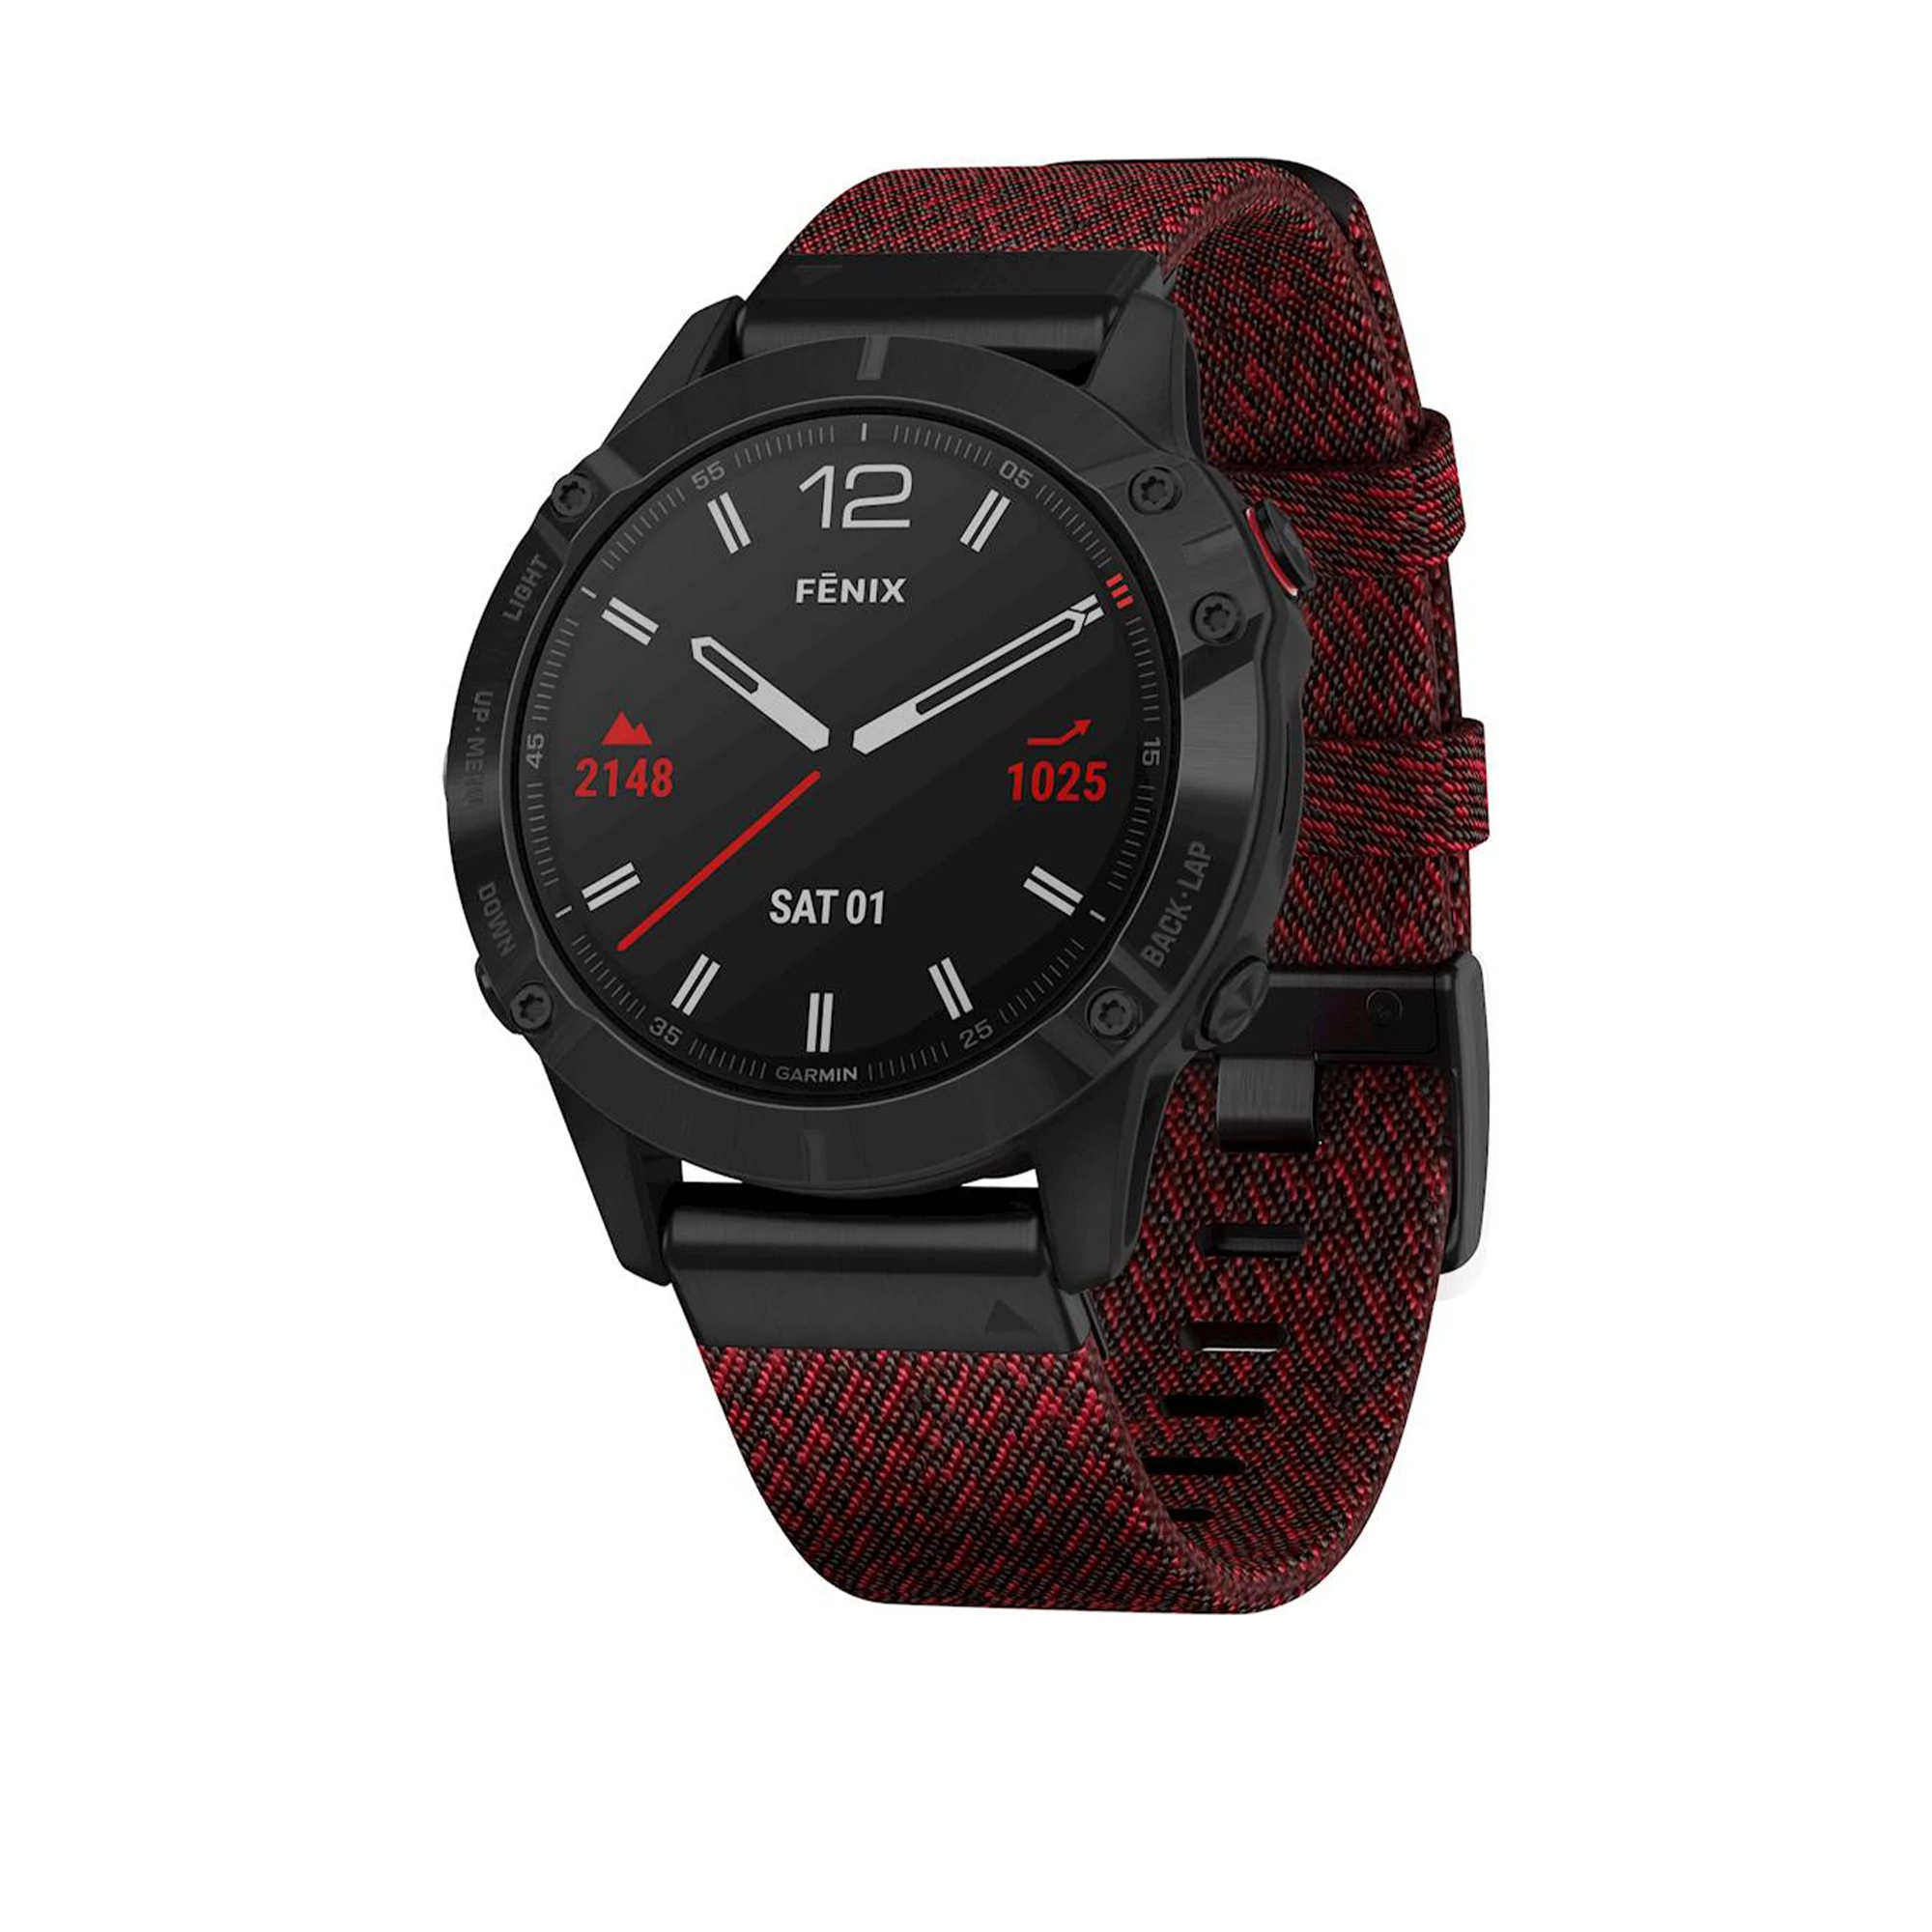 Смарт-часы Garmin Fenix 6 Sapphire Black DLC with Heathered Red Nylon Band (010-02158-16)